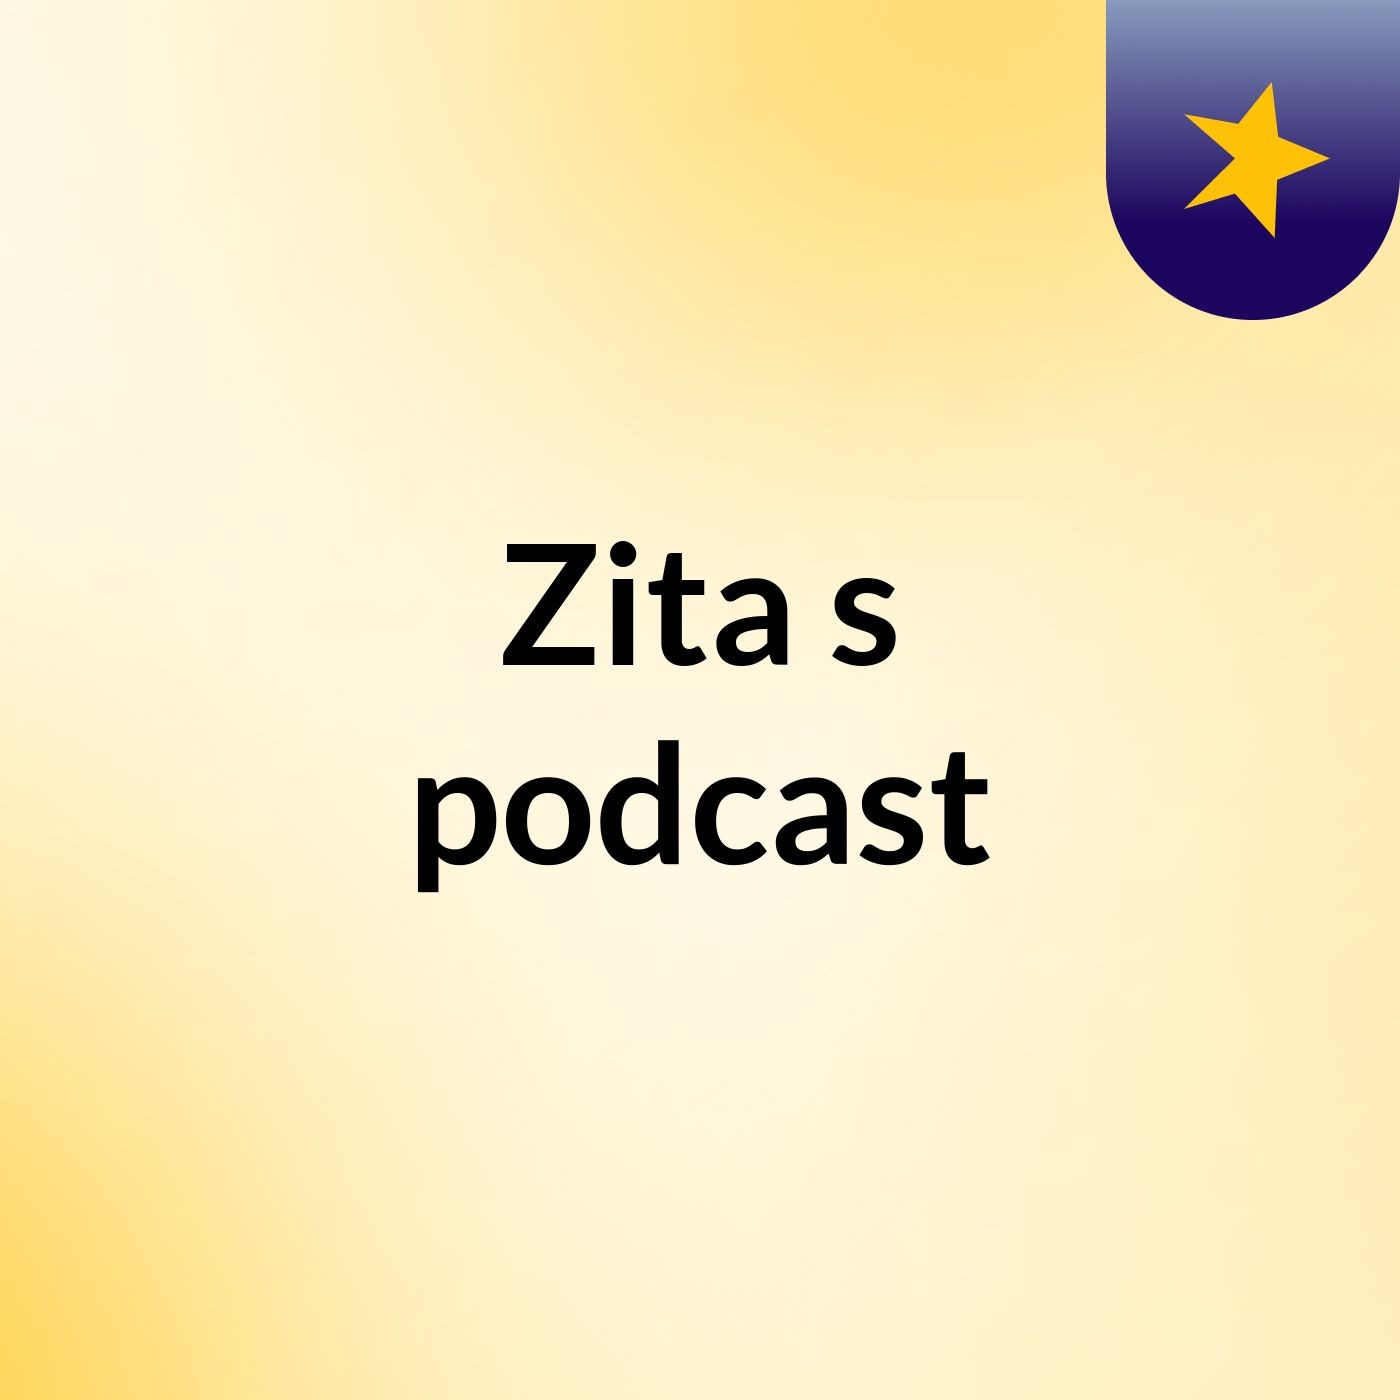 Episode 2 - Zita's podcast